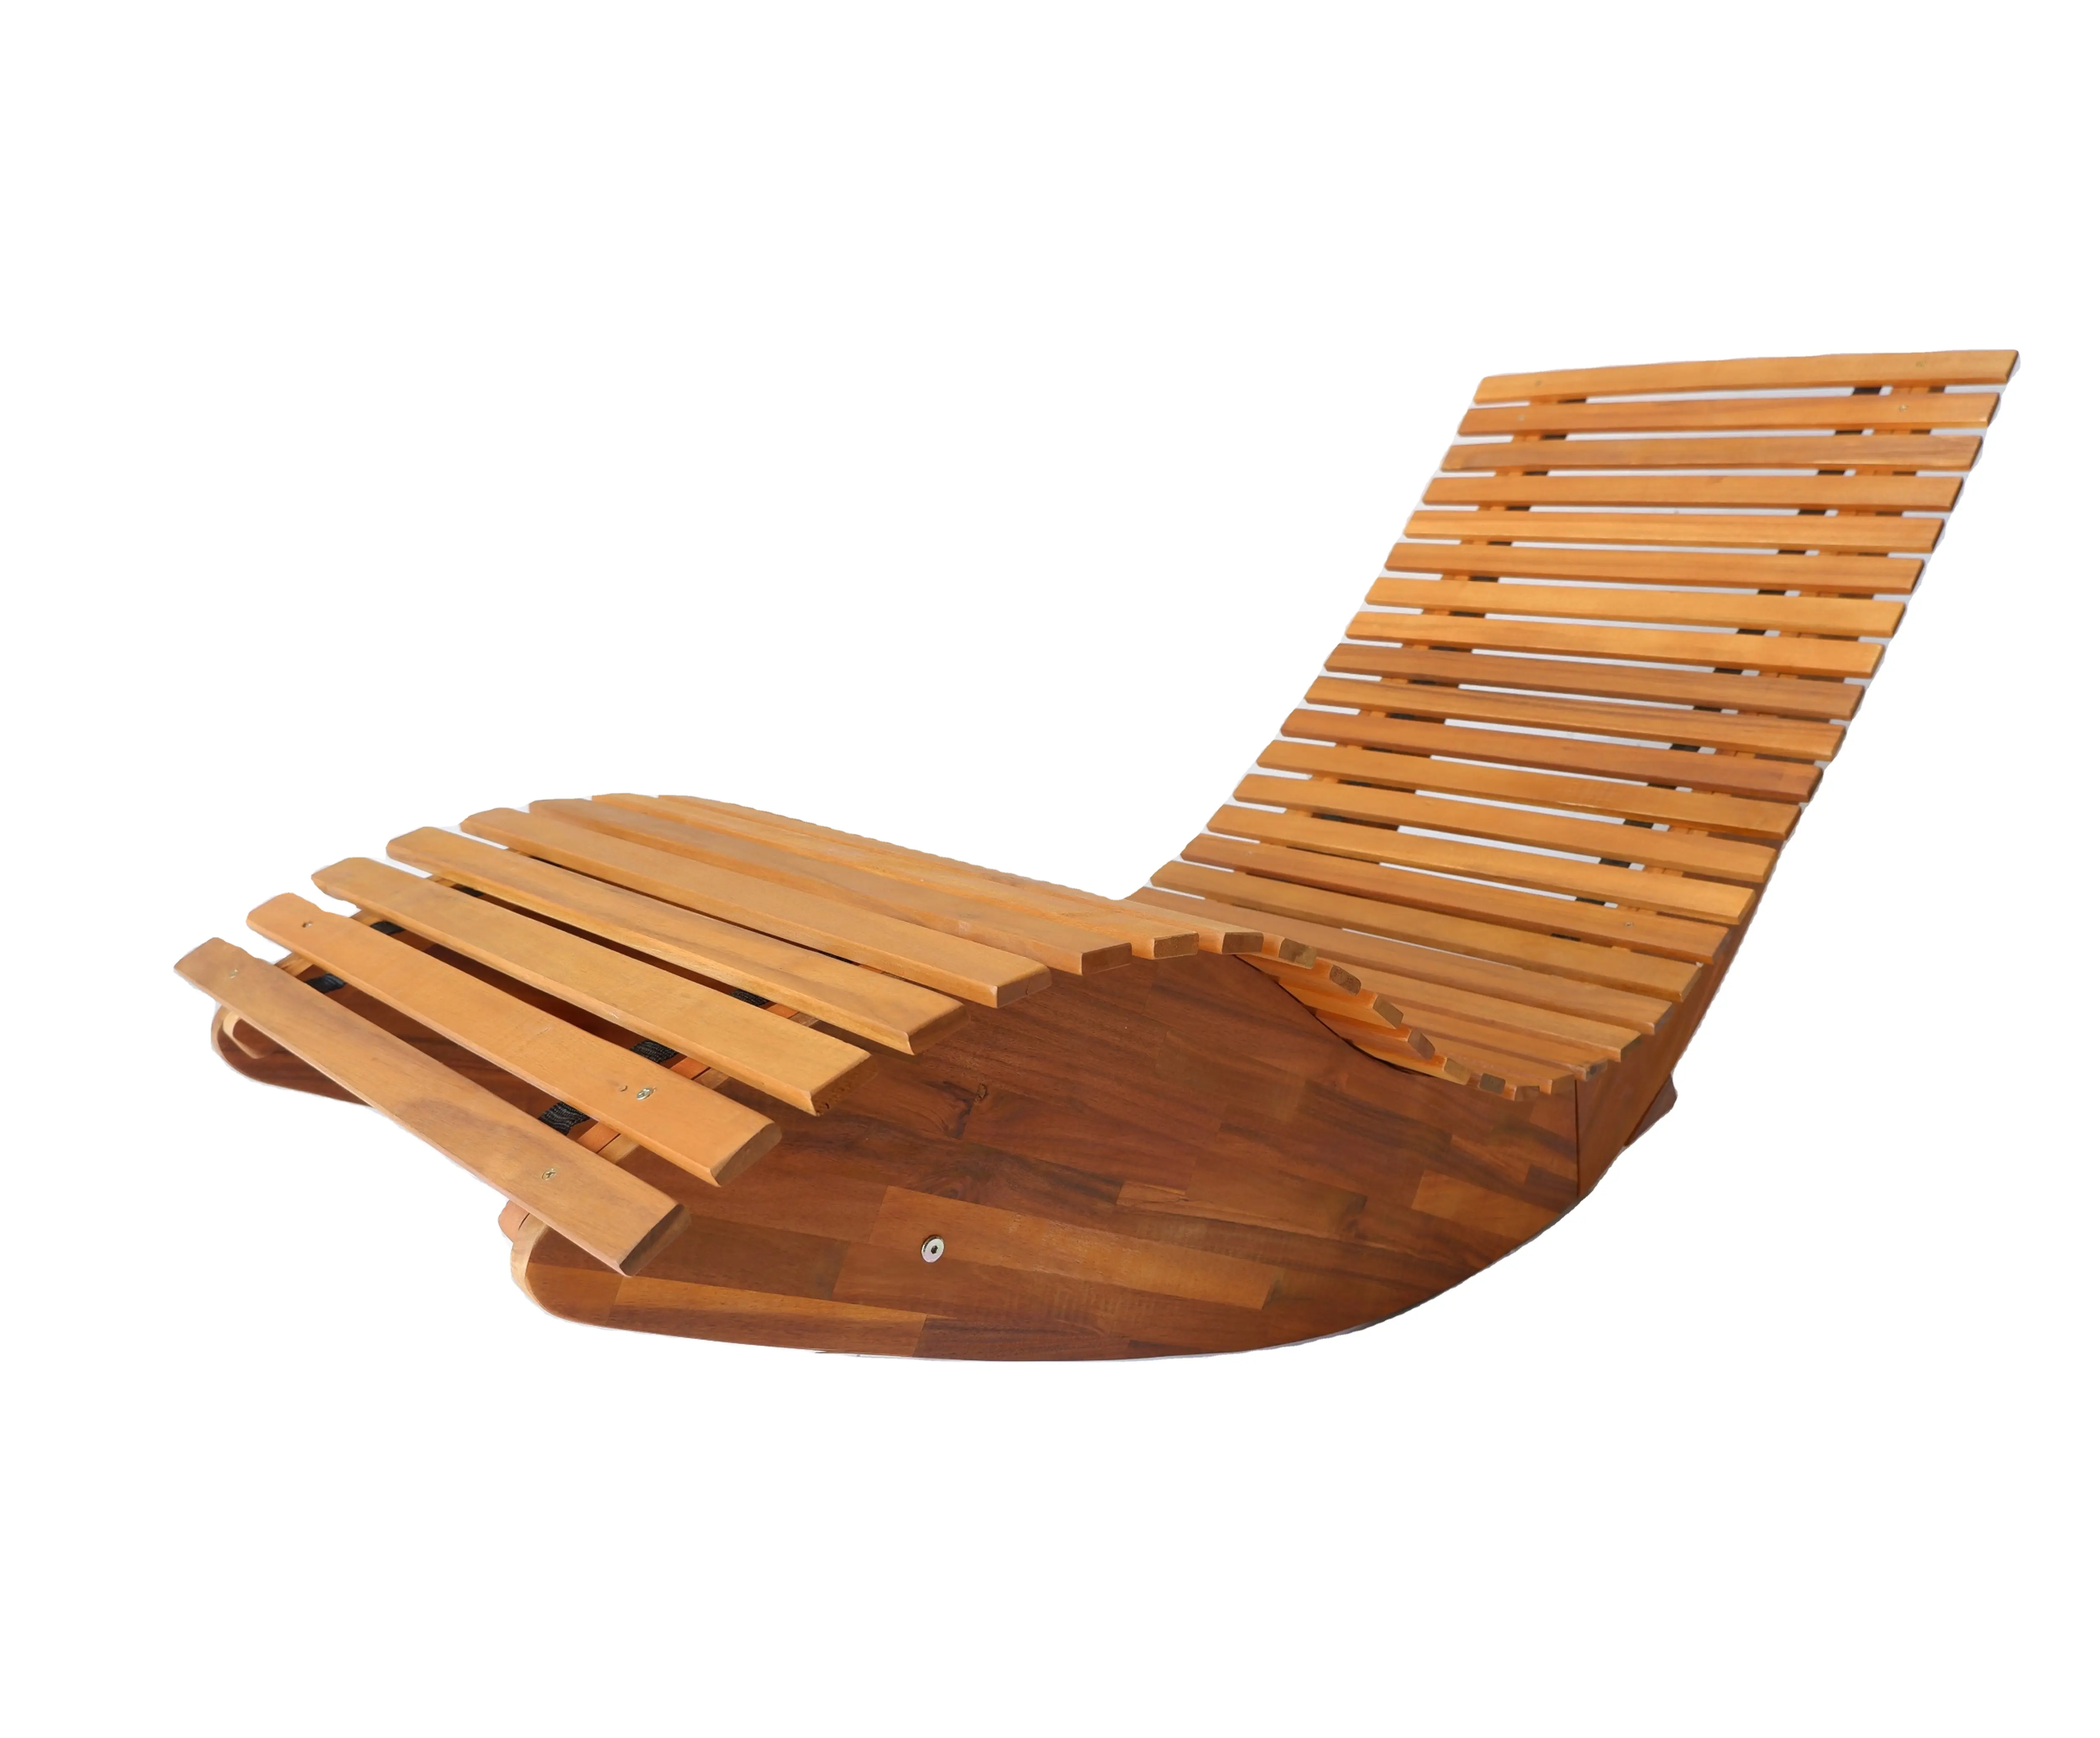 तह आउटडोर Foldable समुद्र तट कुर्सी कुर्सी को आराम Lowseat लाउंज पोर्टेबल लकड़ी जापान अधिकतम प्रकाश रेशम OEM अनुकूलित लकड़ी सूरज आईएसओ